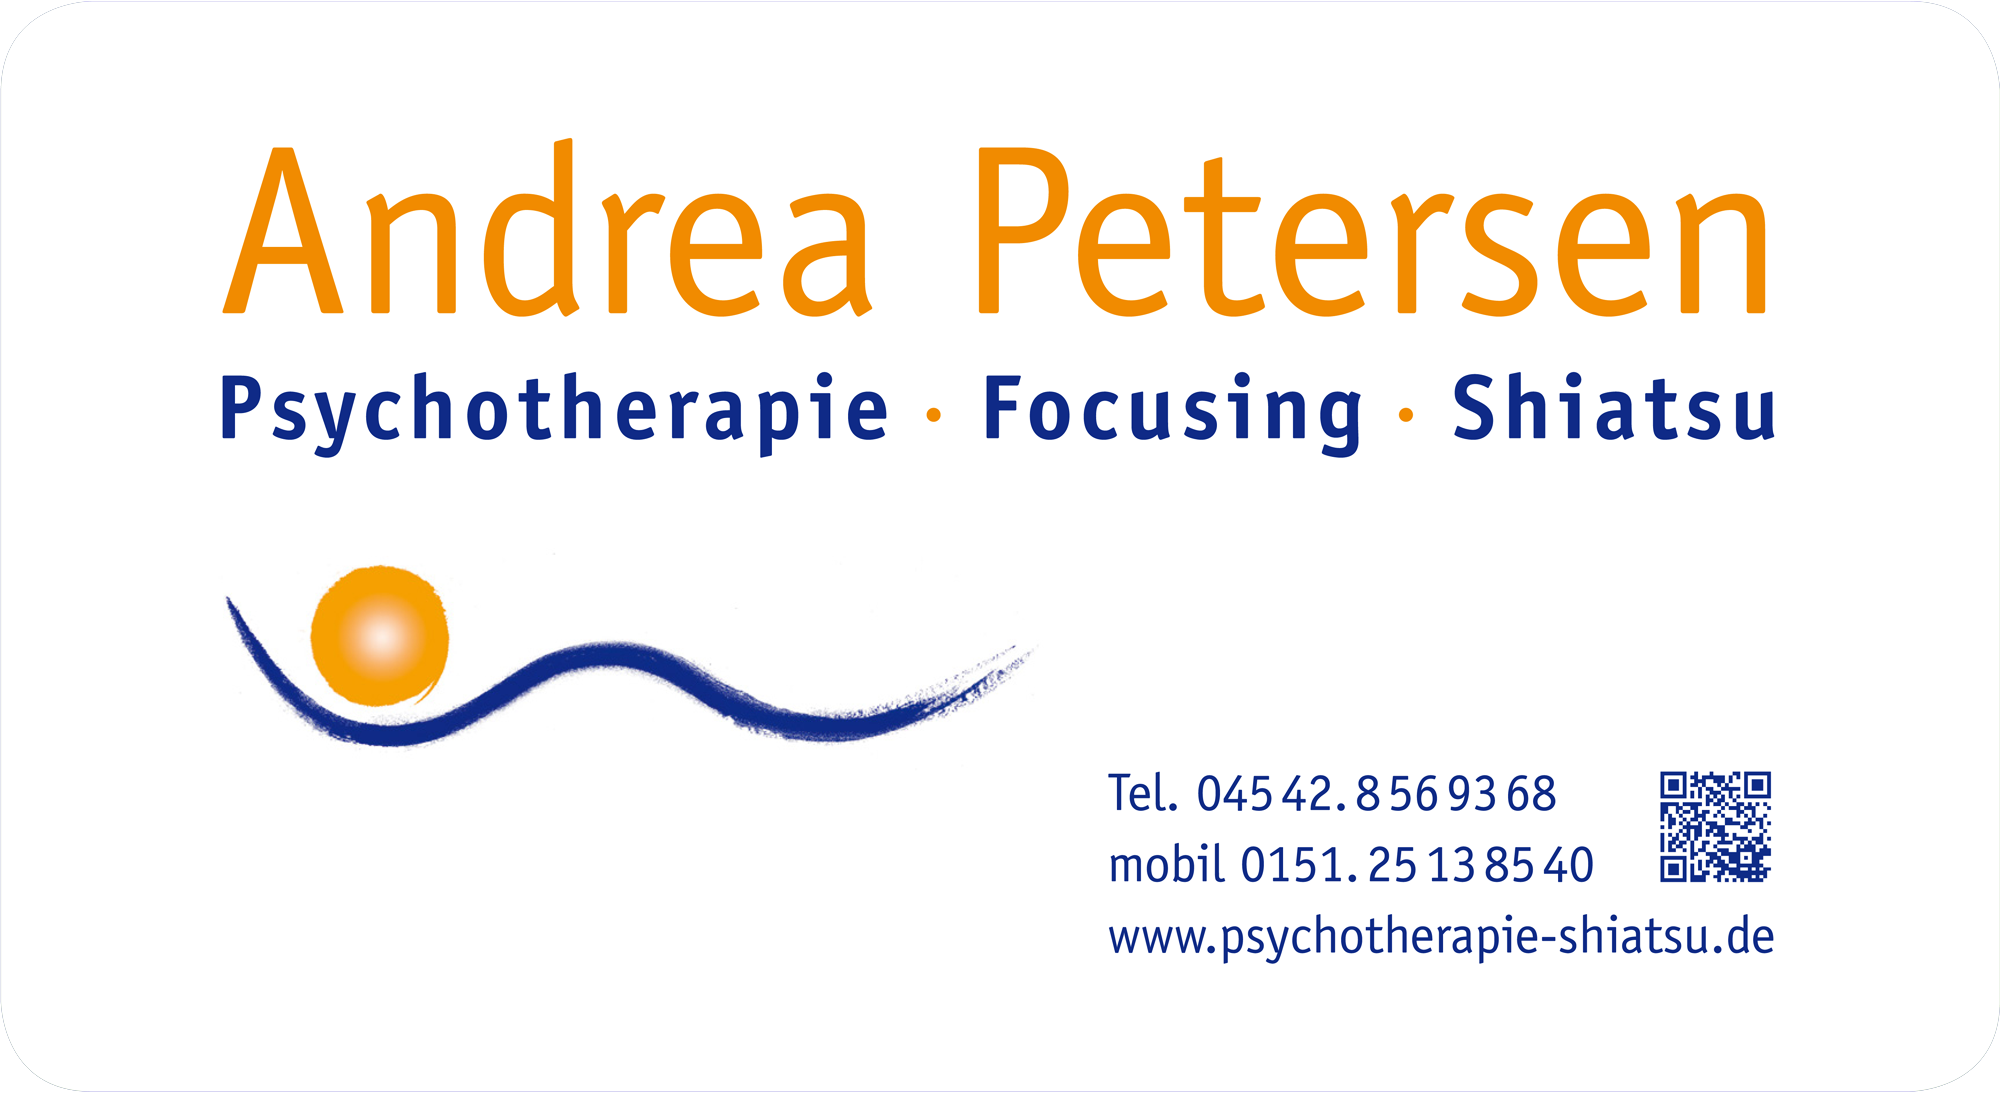 Andrea Petersen - Psychotherapie - Focusing - Shiatsu